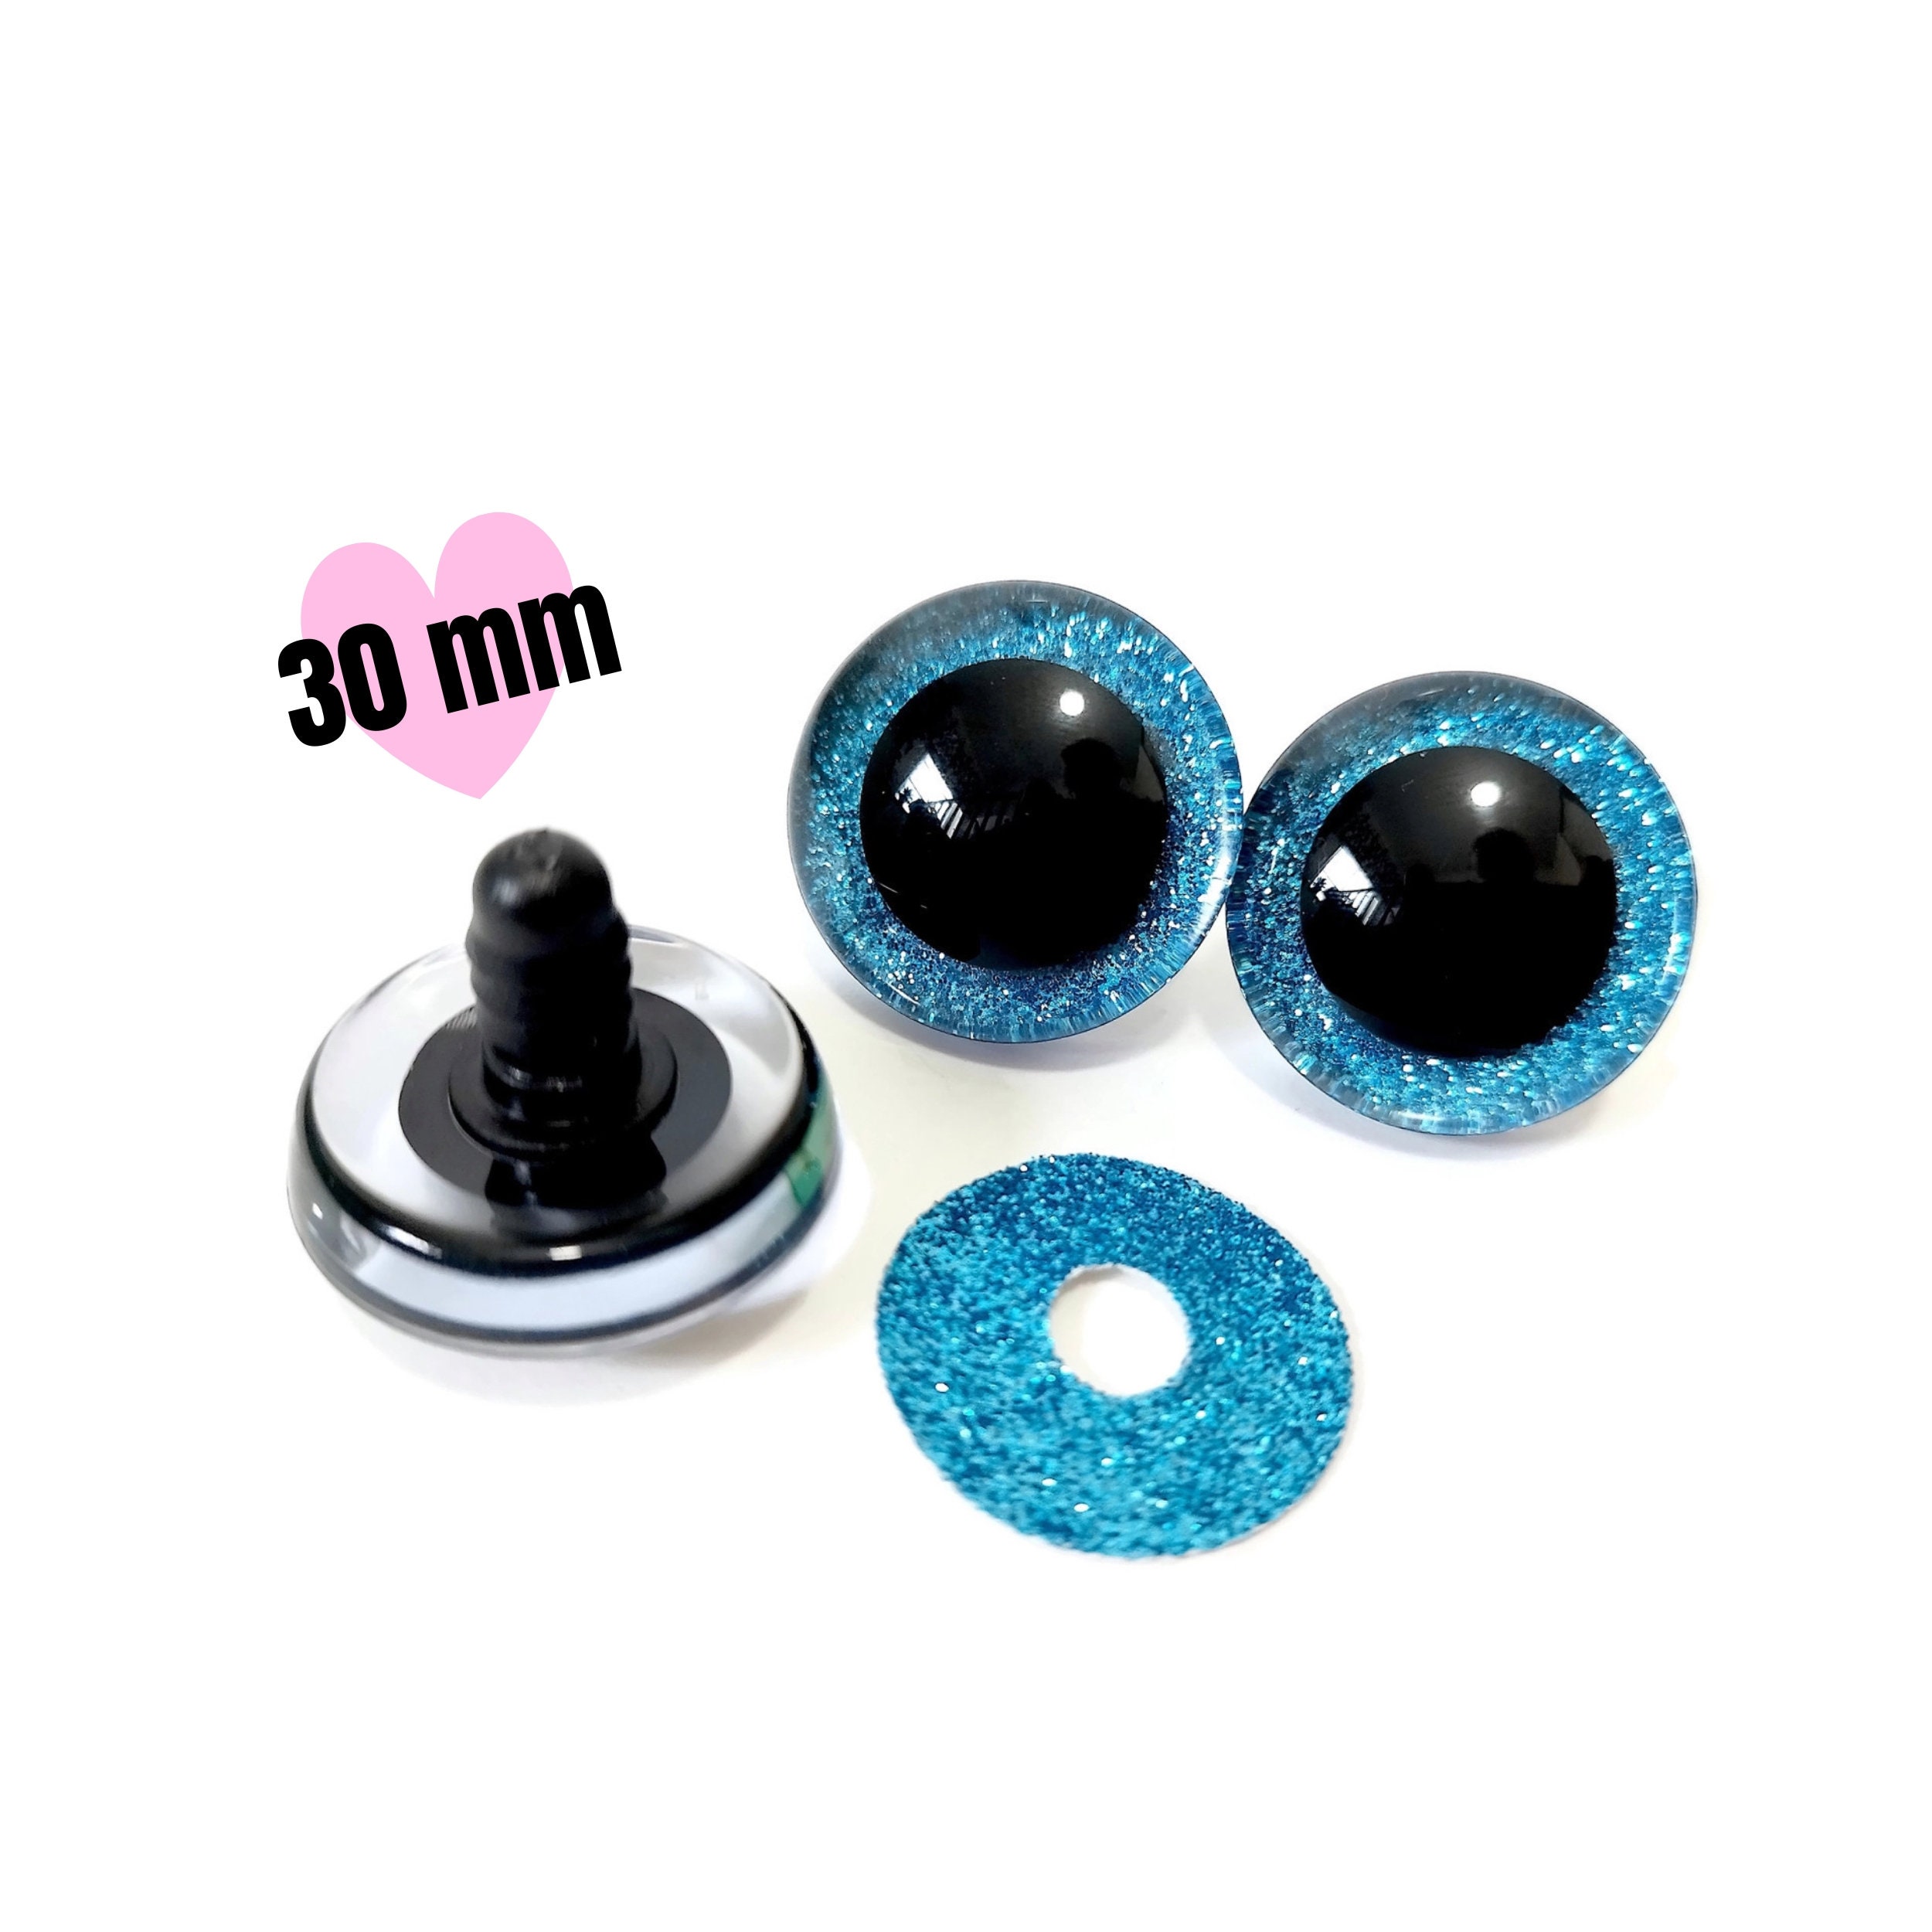 Big Blue 3D Glitter SAFETY EYES 30 mm • Tiktok amigurumi eyes • Safety Eyes  with Plastic Backs for Teddy Bear • Animal Soft Toy Making